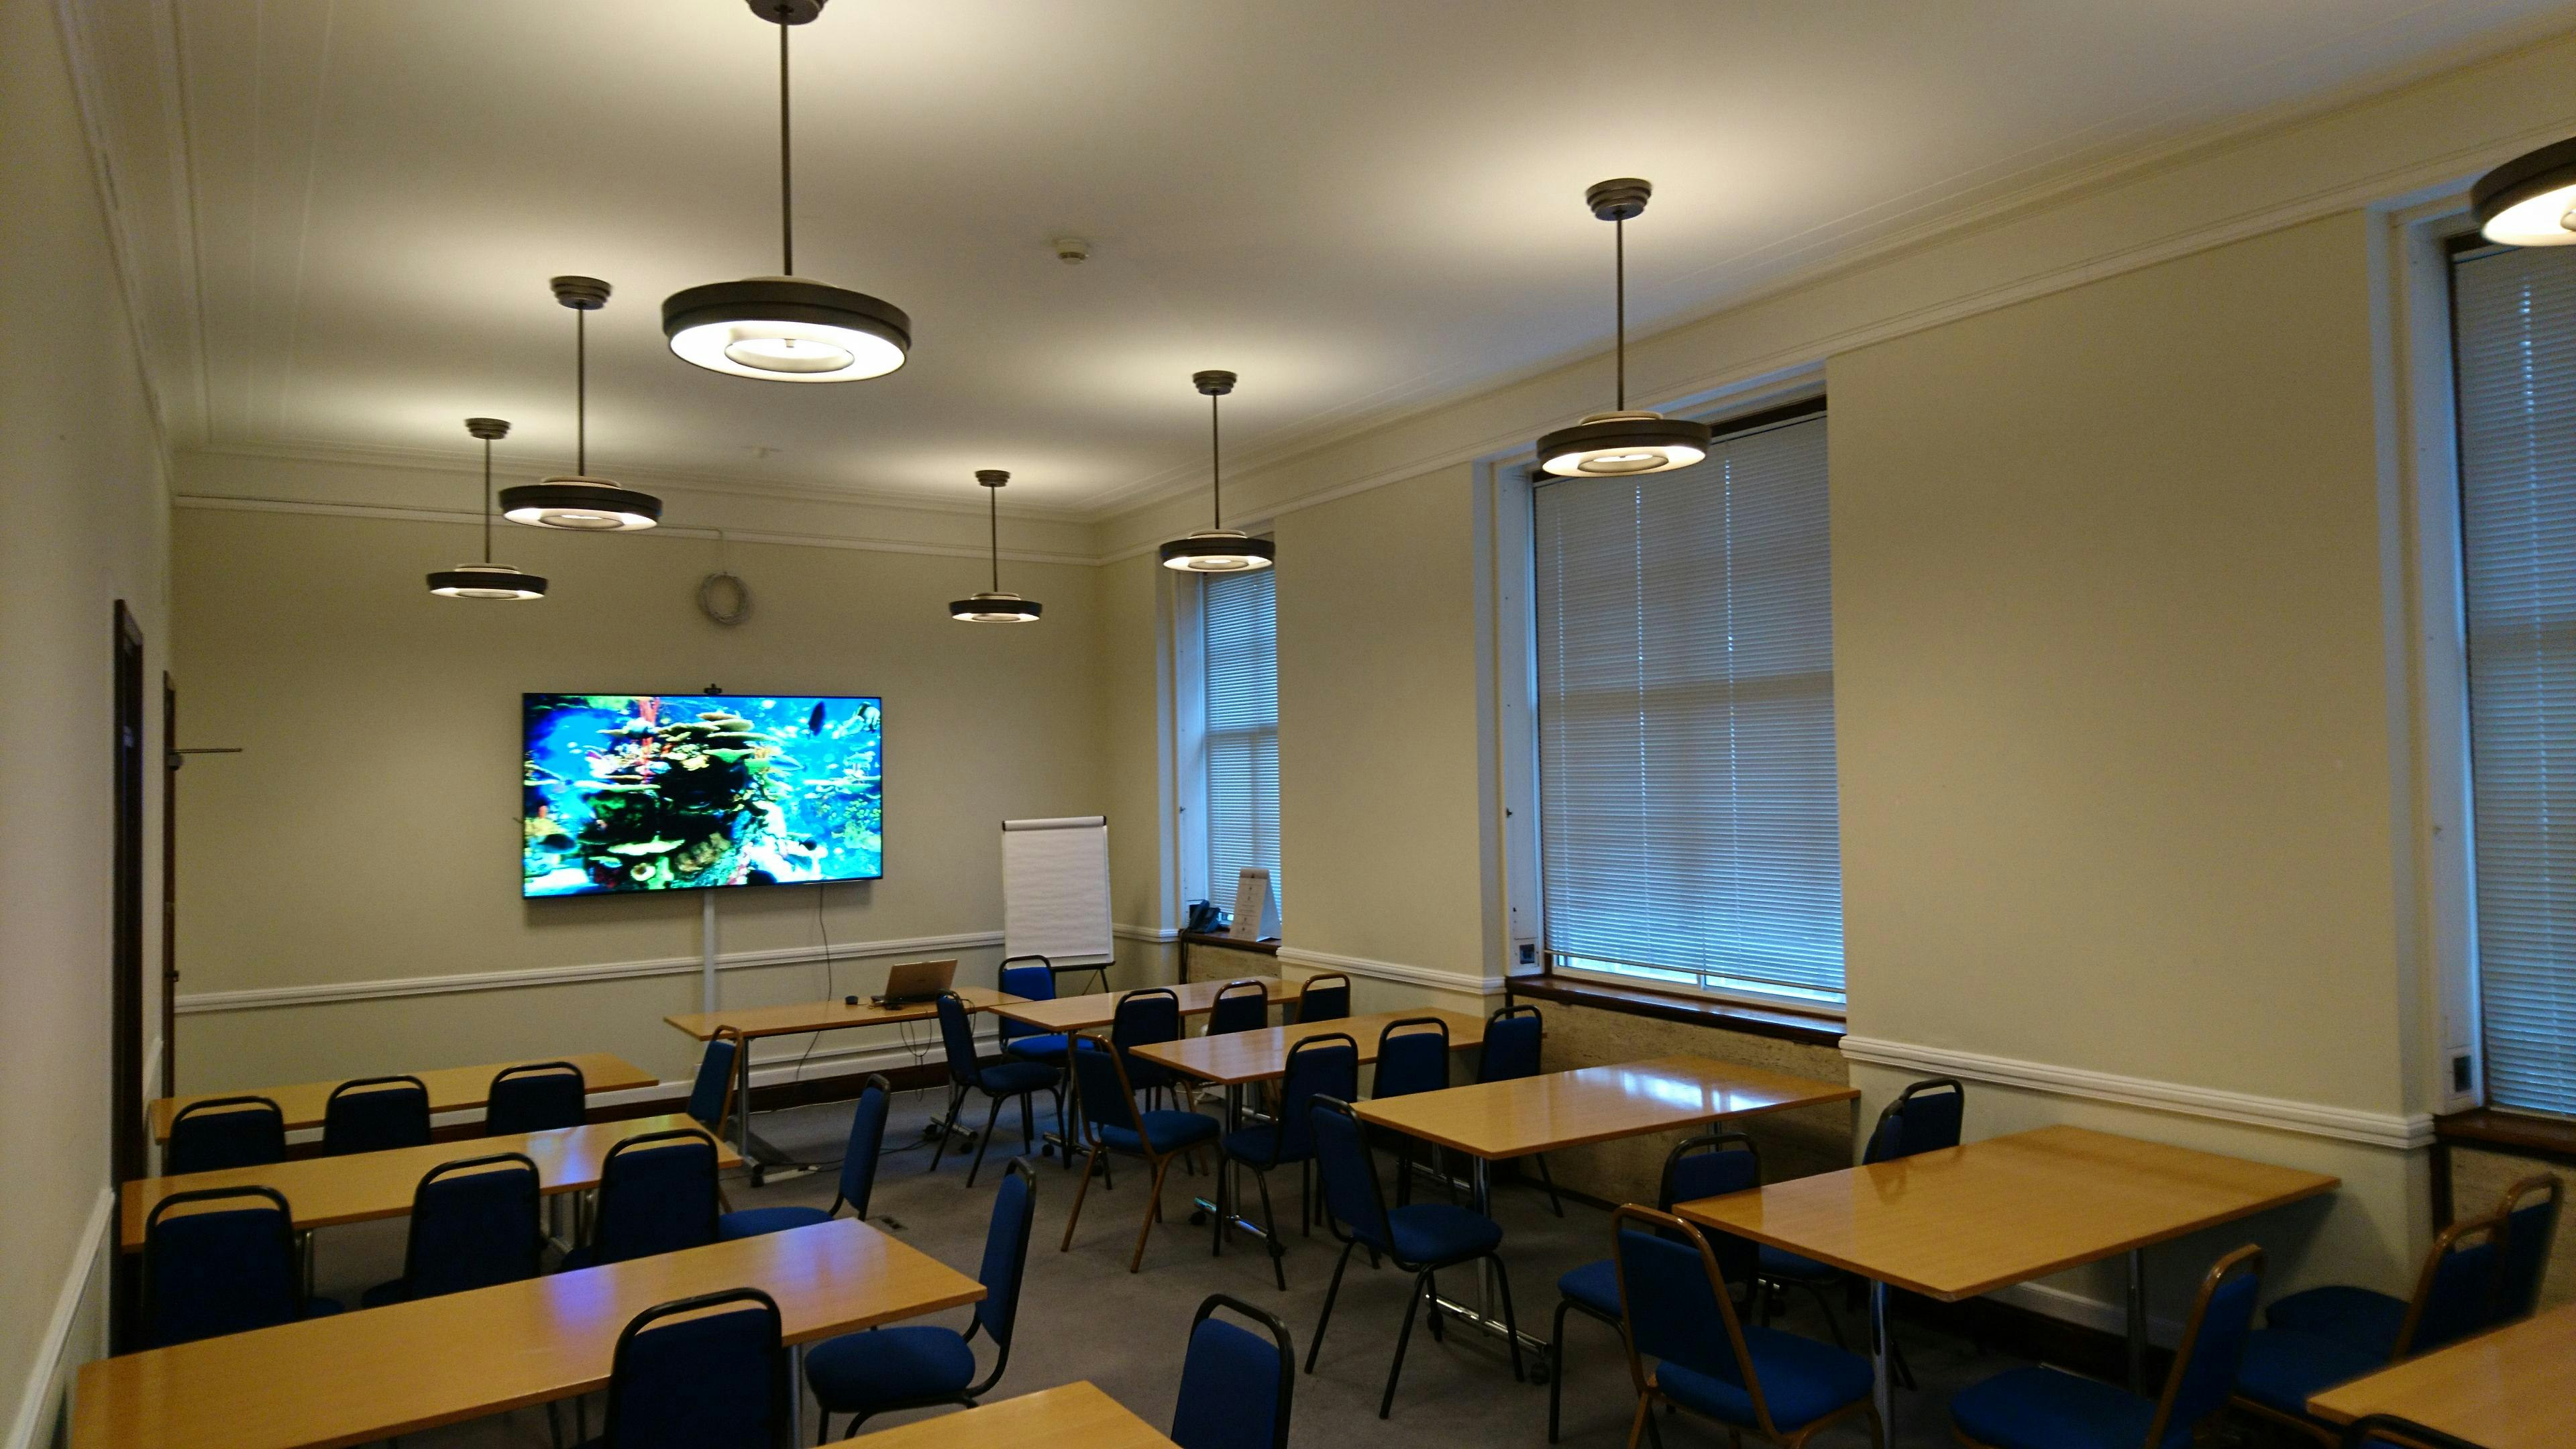 University of London Venues - Meeting Rooms - Breakout Spaces image 2